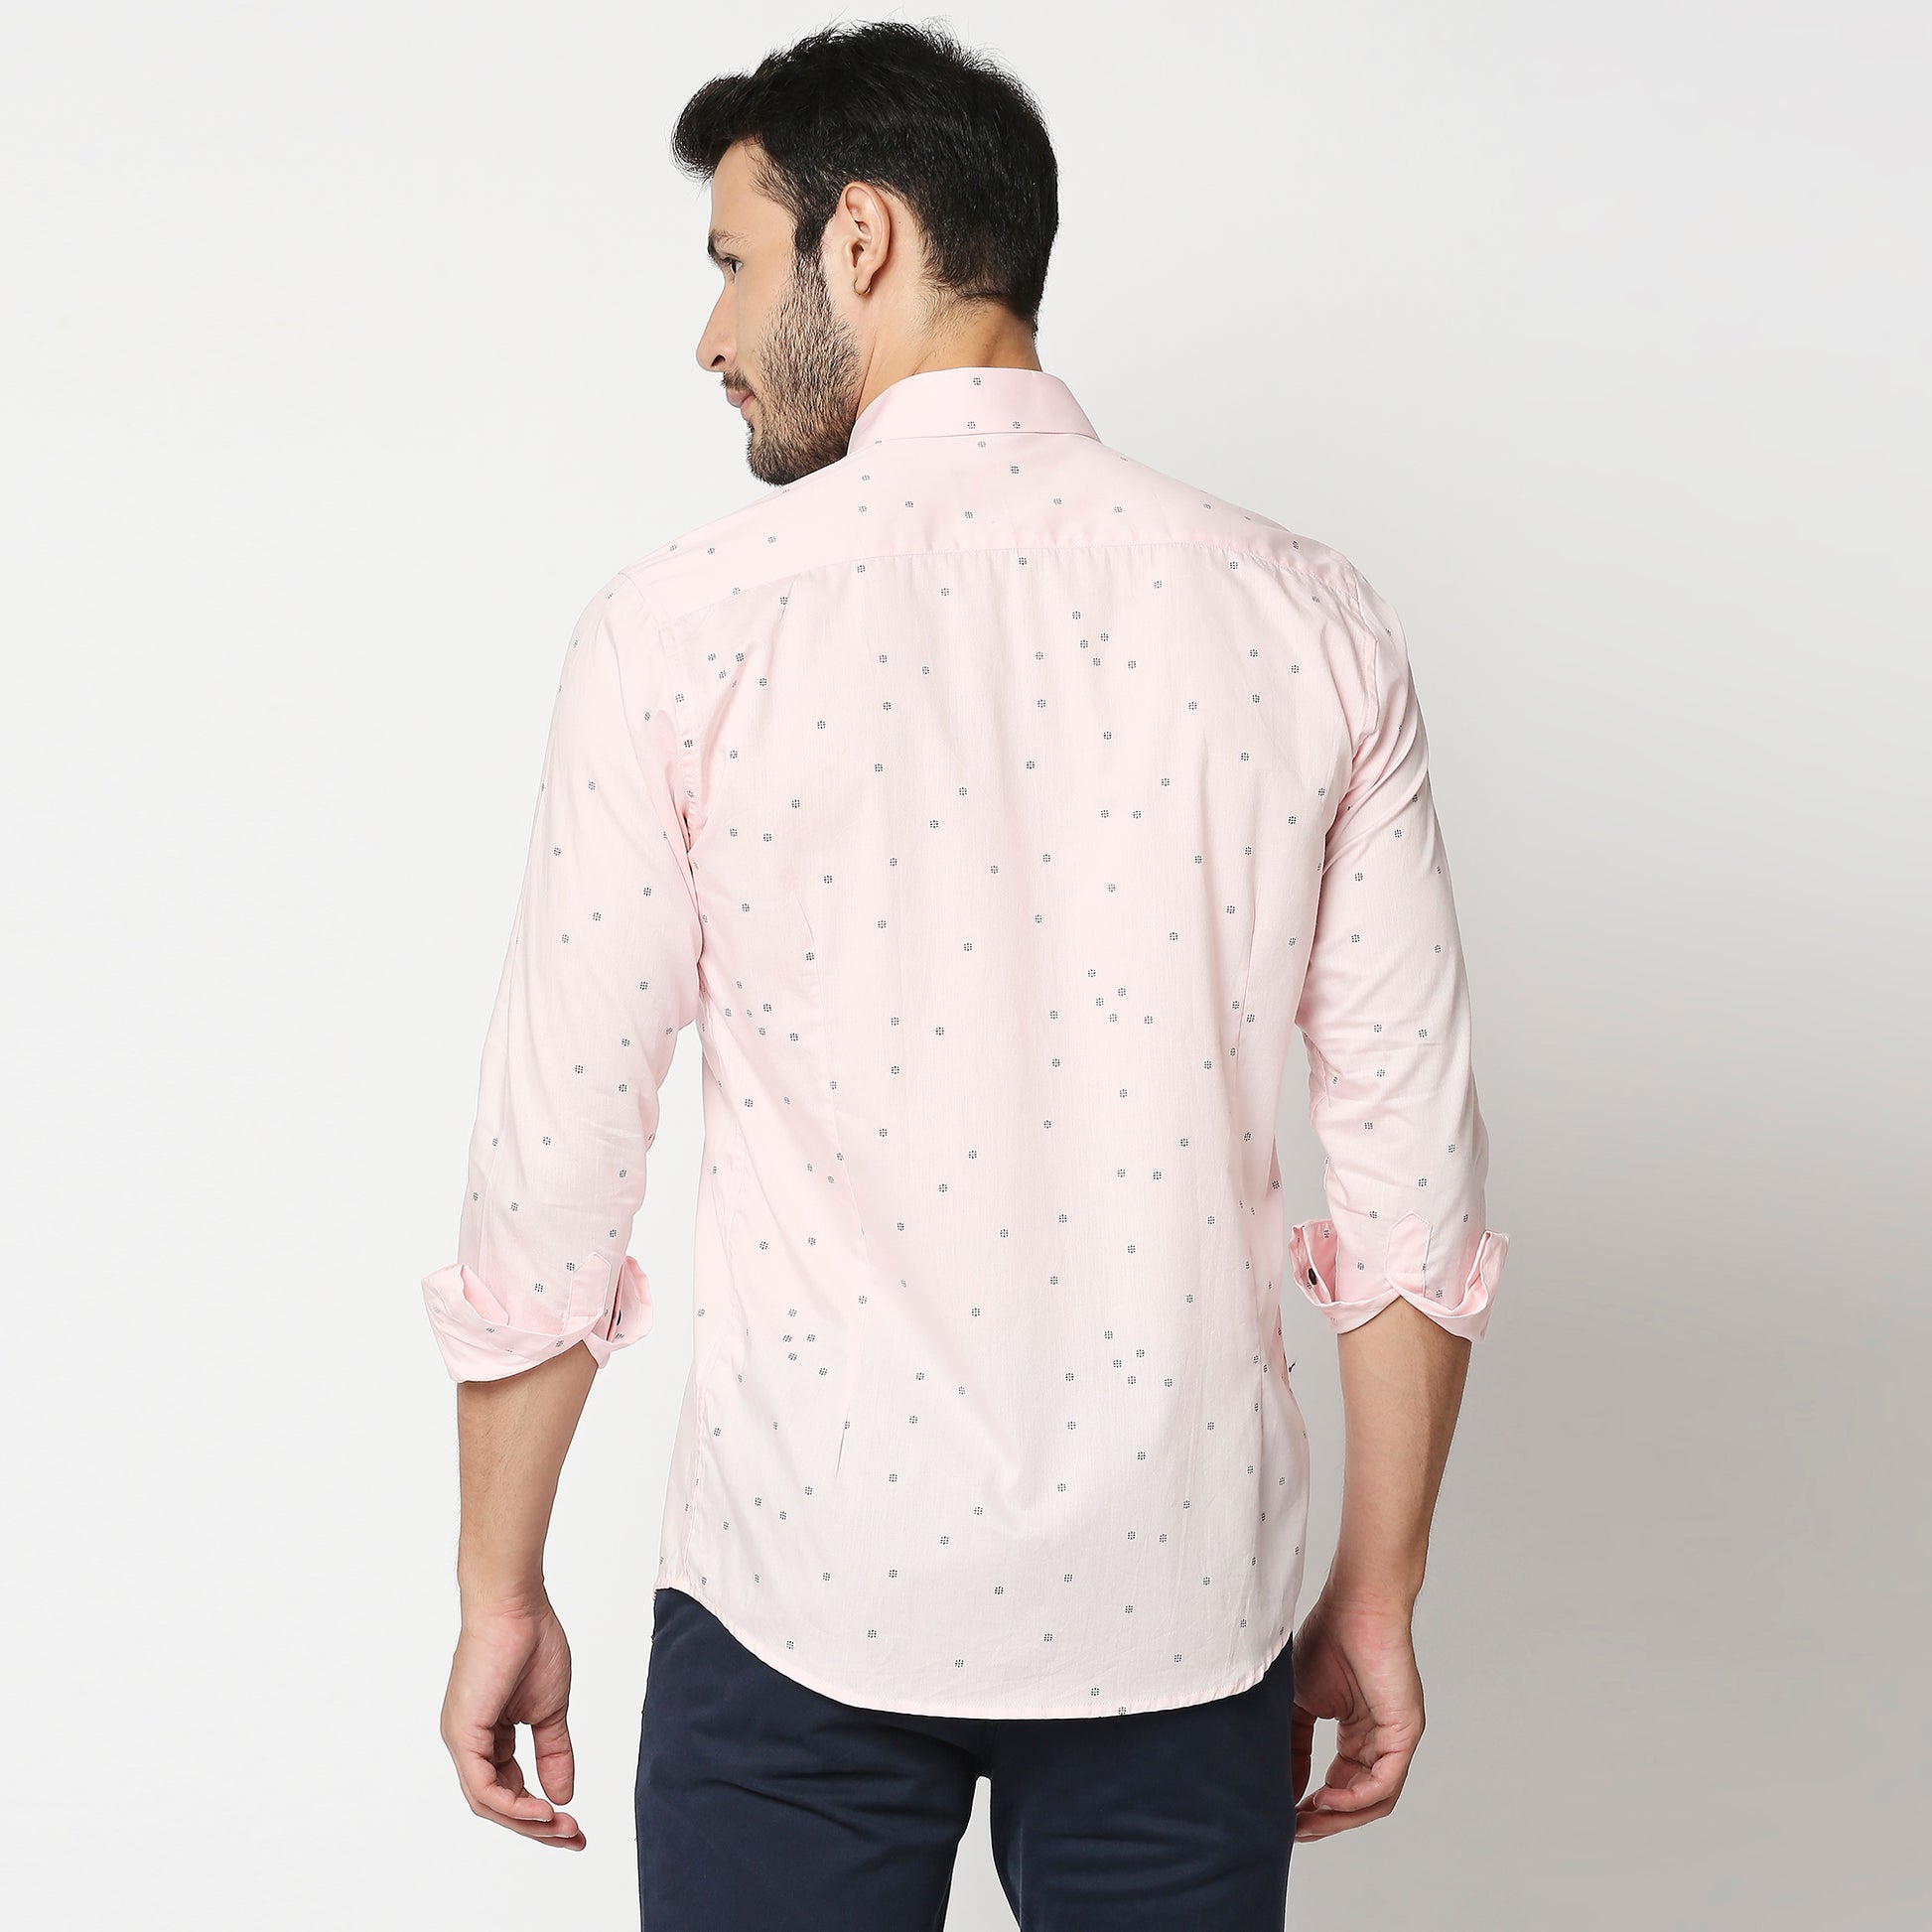 Fostino Pink Printed Full Sleeves Shirt - Fostino - Shirts & Tops